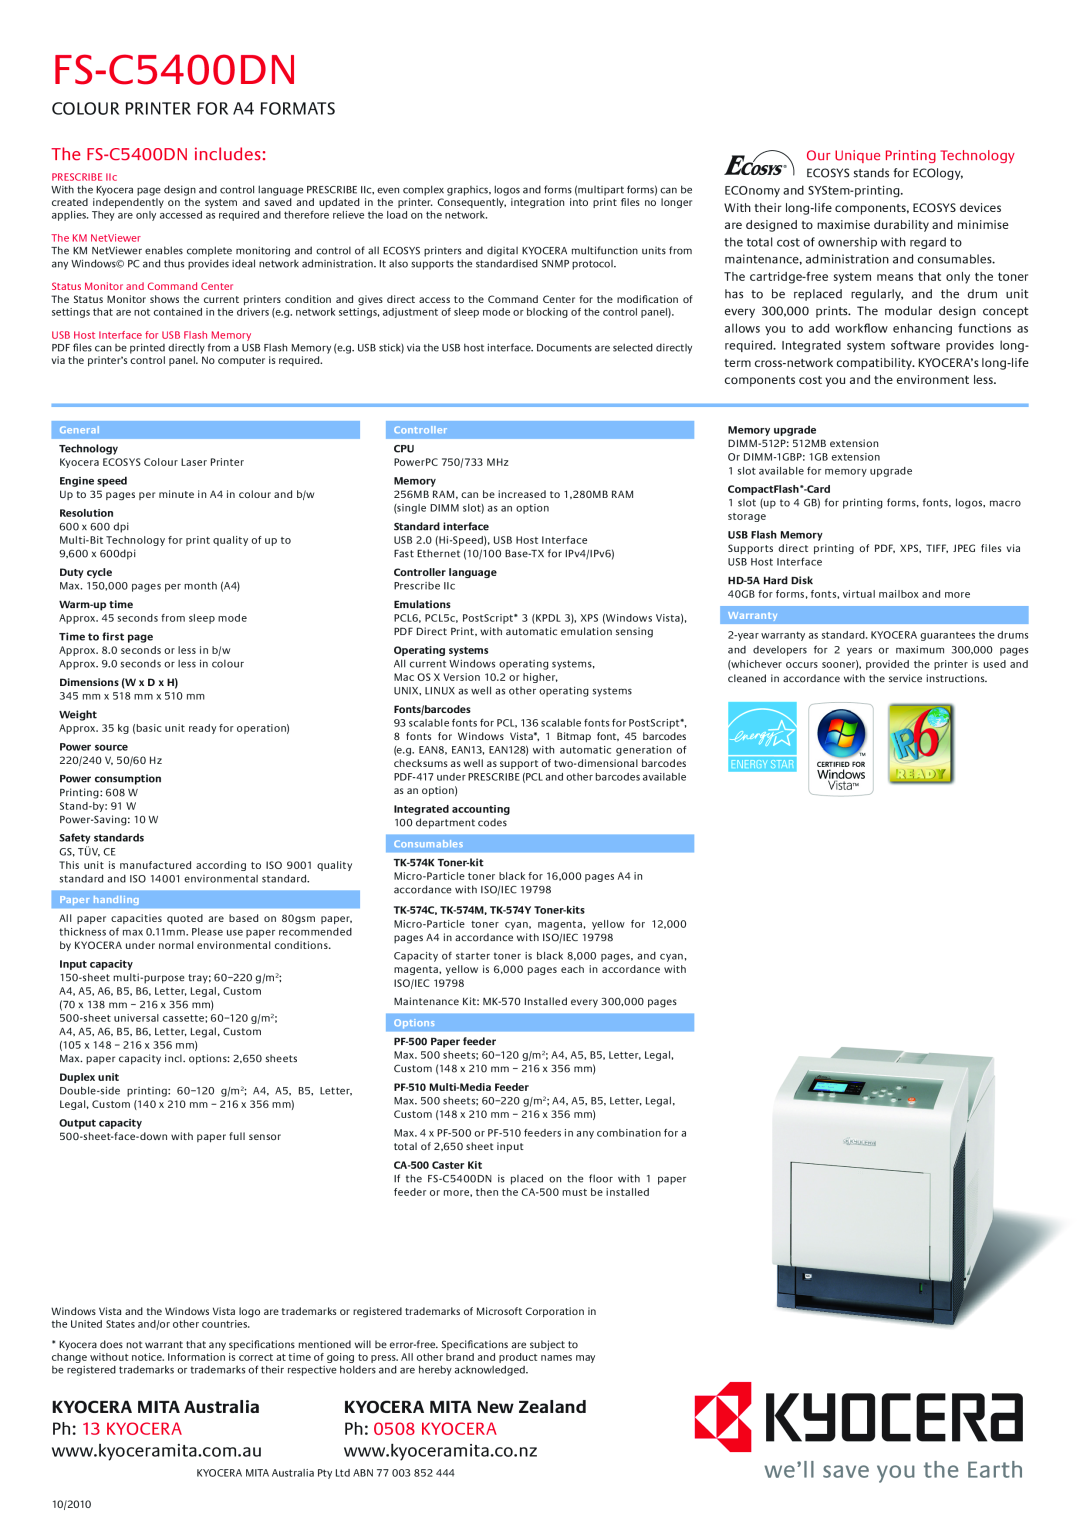 Kyocera colour printer for a4 formats, The FS-C5400DNincludes, KYOCERA MITA Australia, Ph: 13 KYOCERA, Ph 0508 KYOCERA 